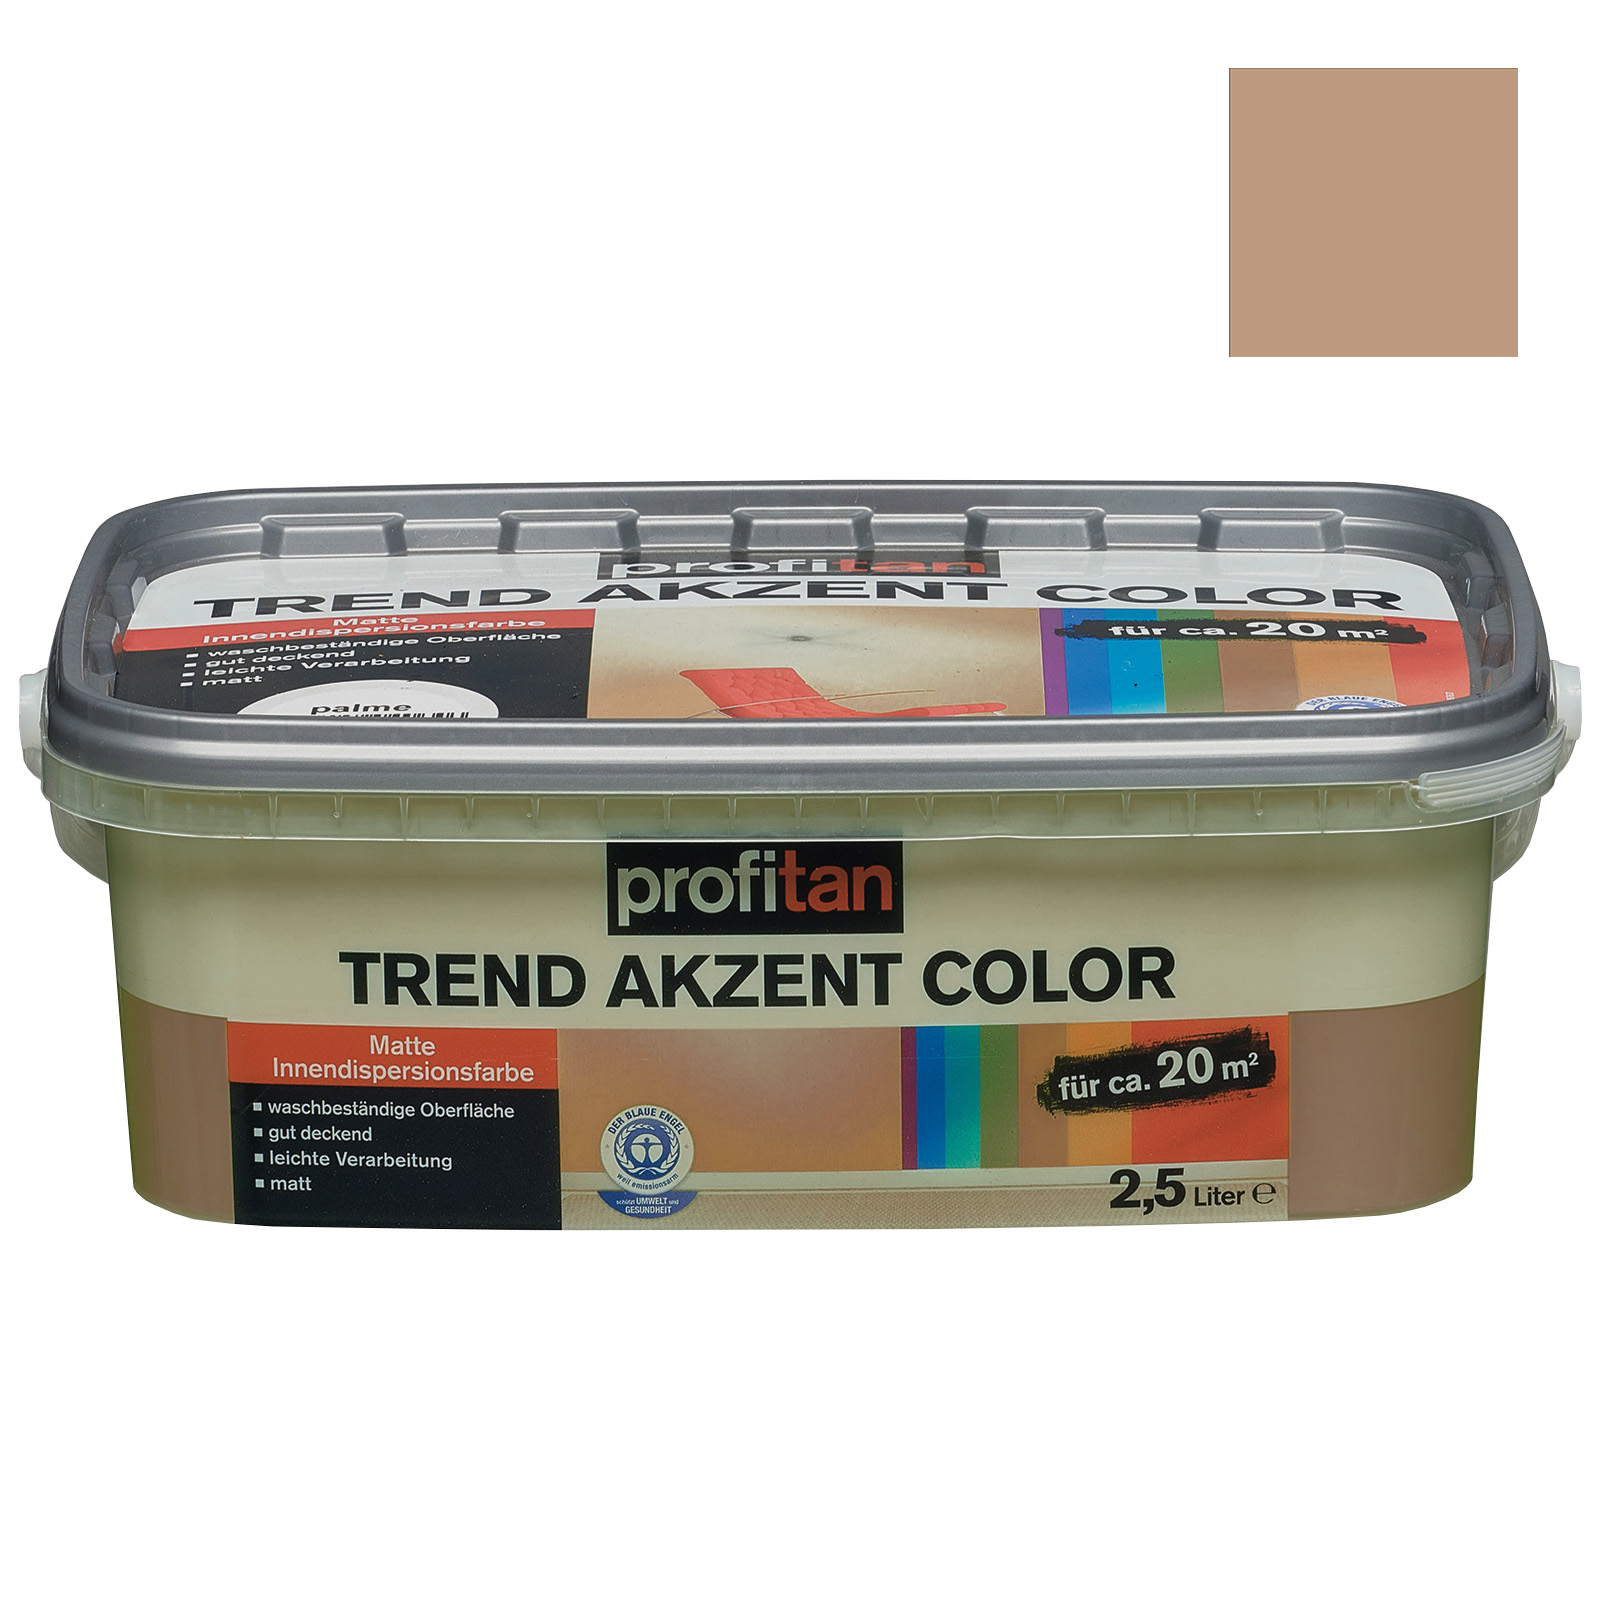 profitan Wandfarbe Trend Akzent Color - liane matt - 2,5 Liter | Online